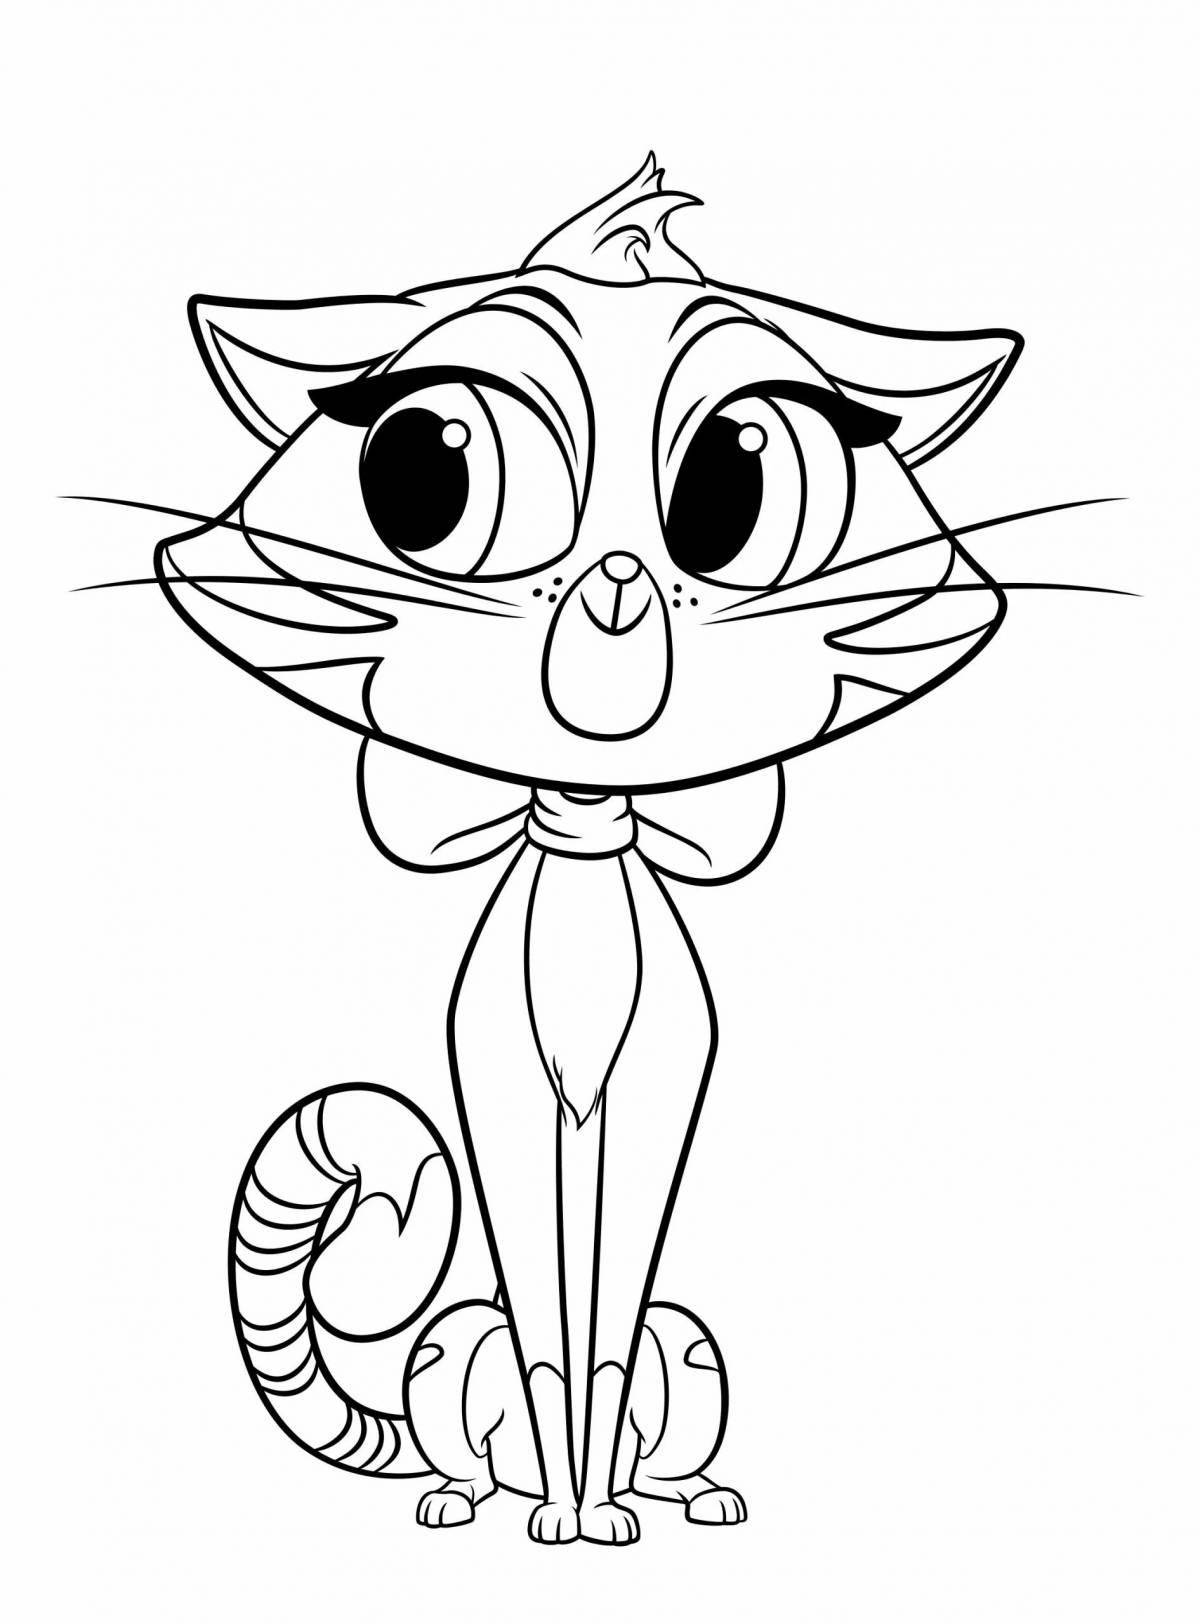 Animated cartoon cat coloring book